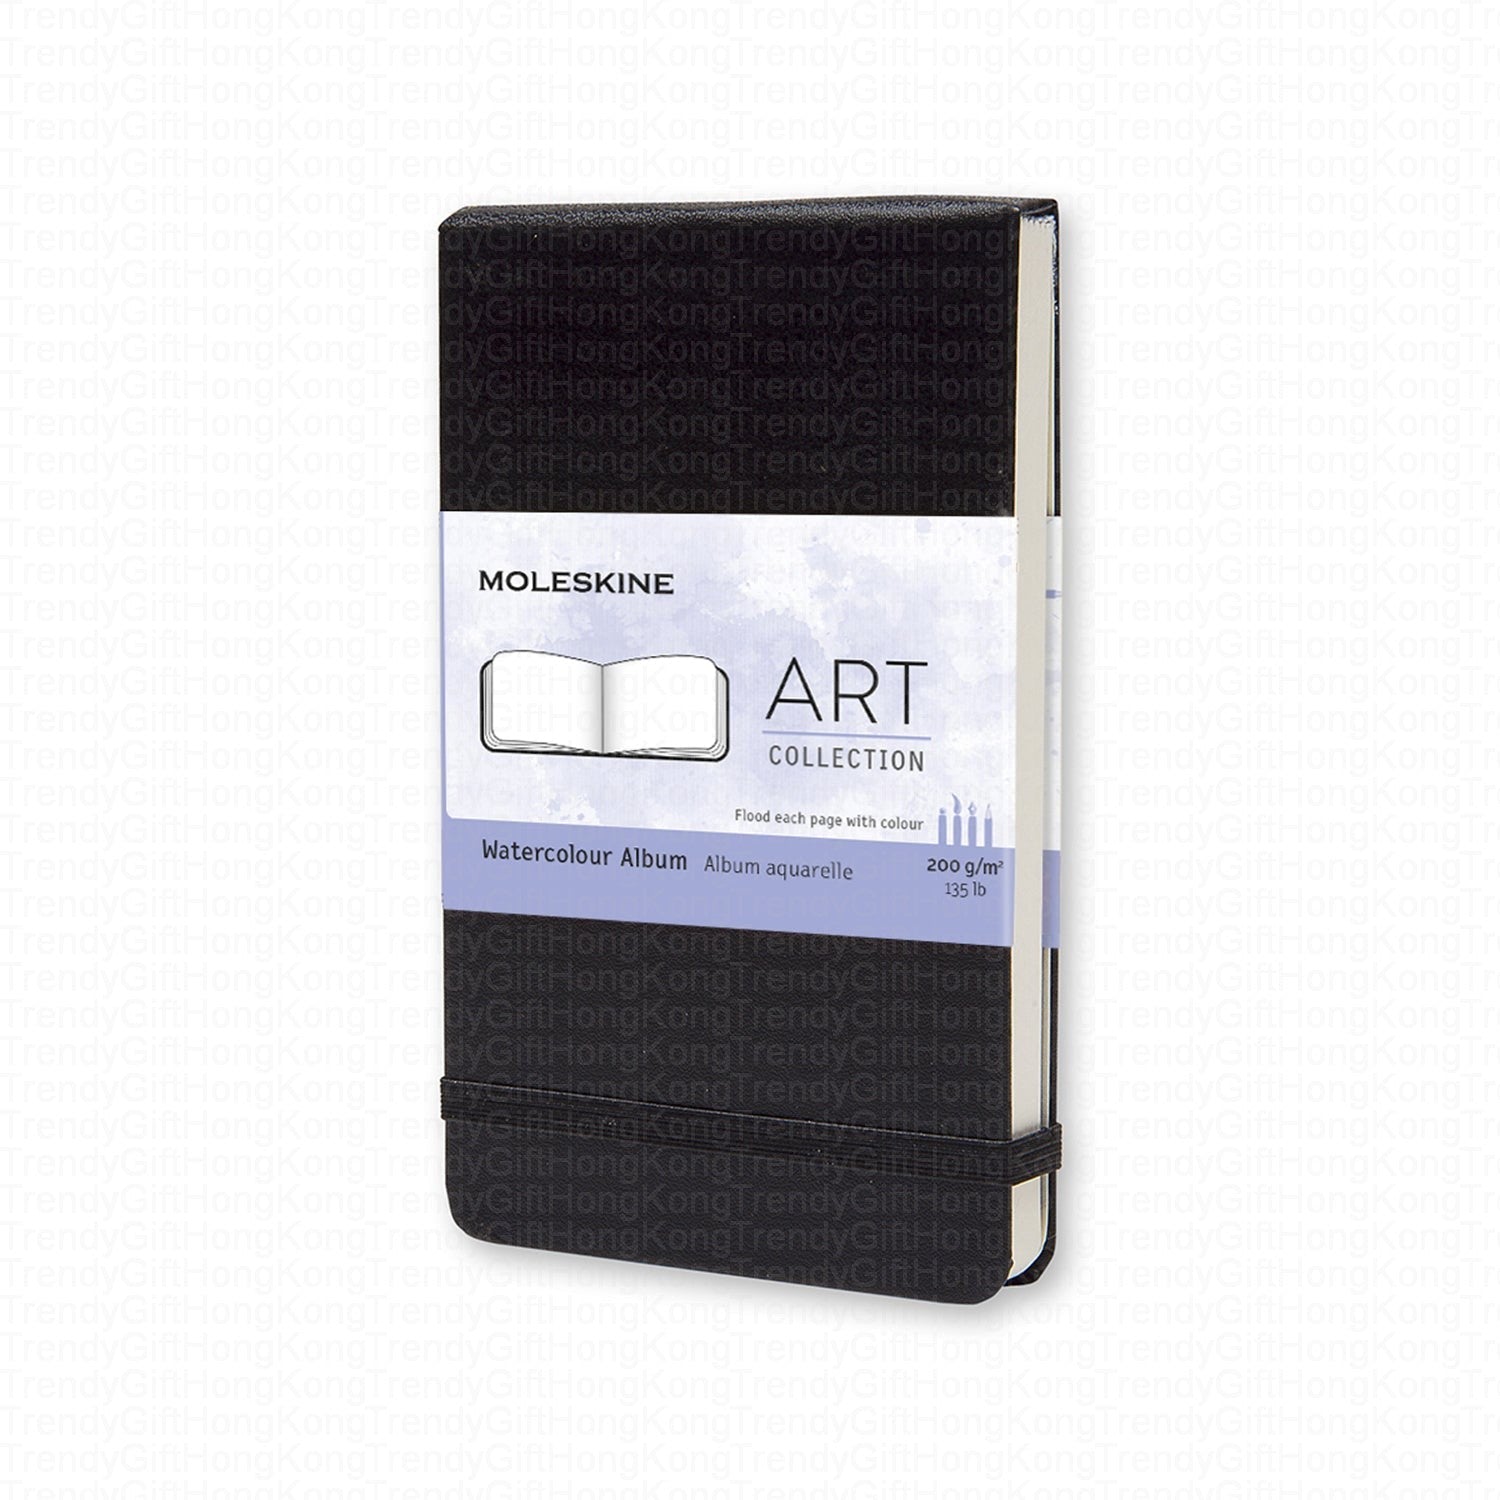 Moleskine Watercolor Album Pocket Black 200 GSM 9x14cm trendygifthk